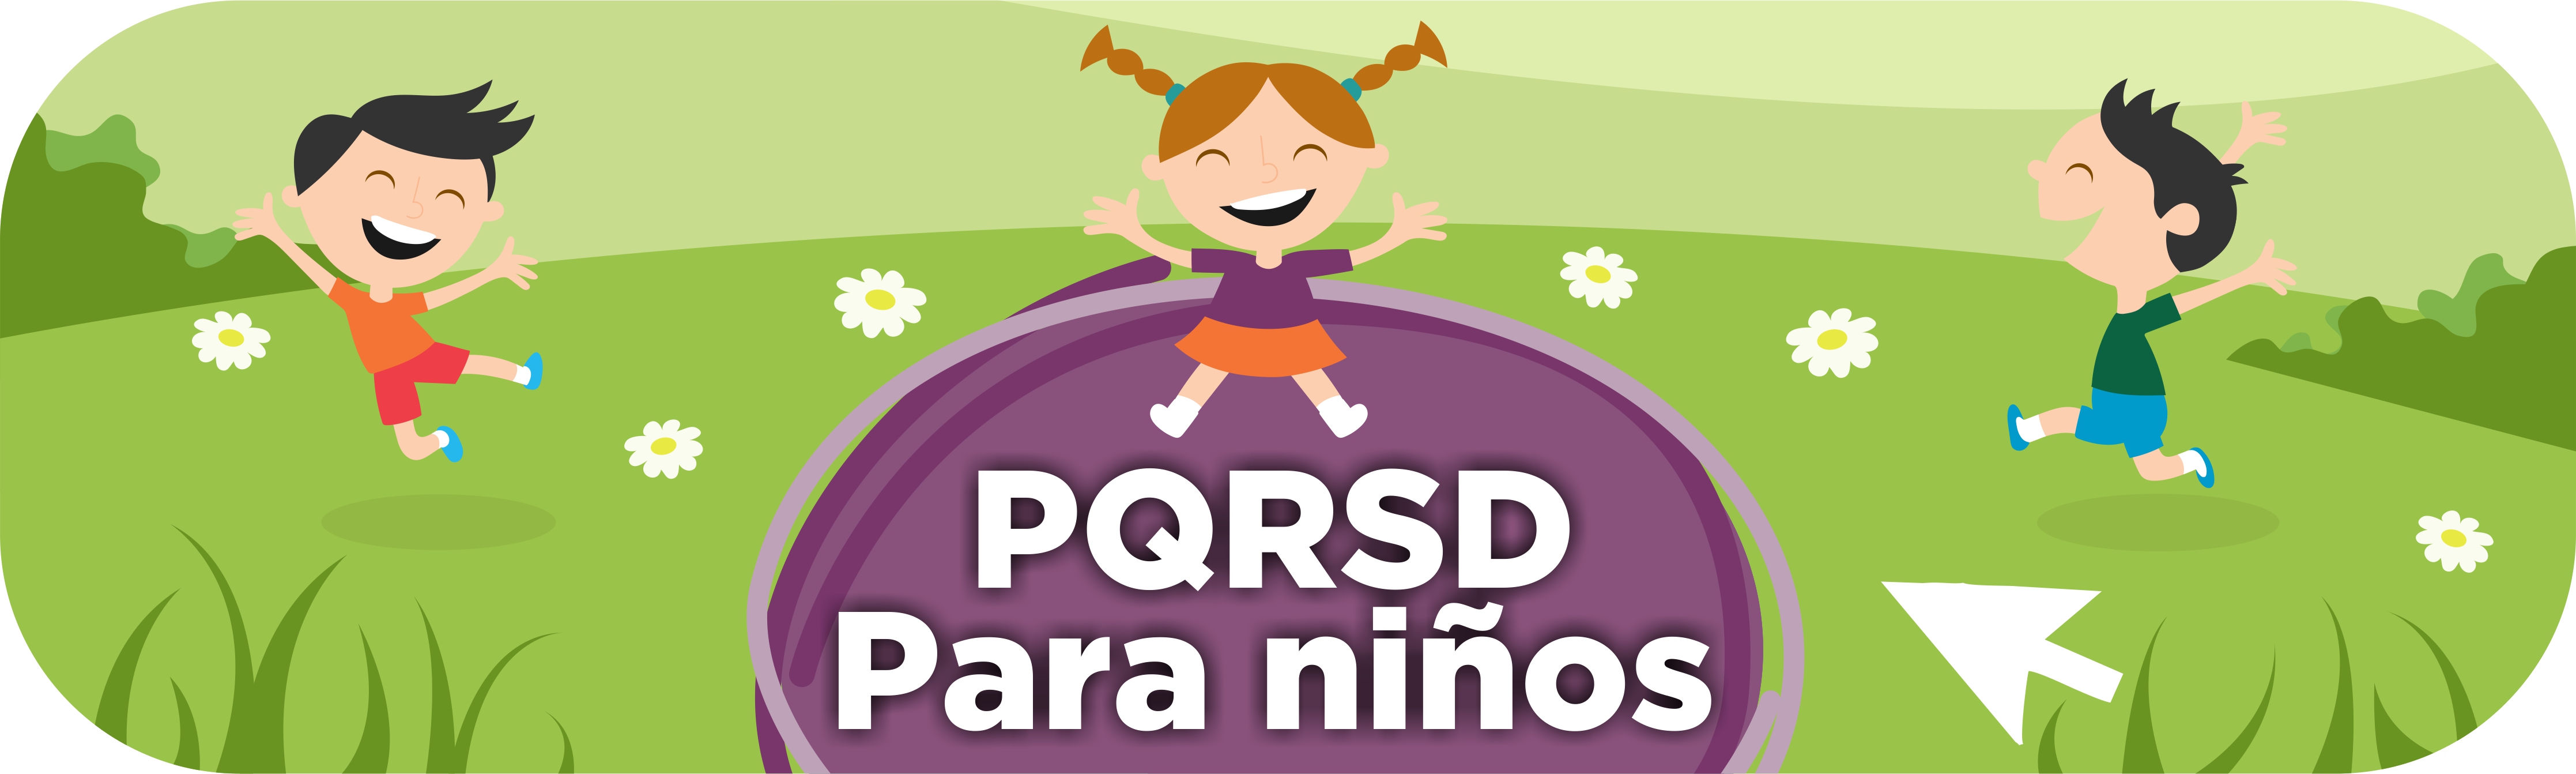 PQRS_para_niños.jpg - 801.26 kB